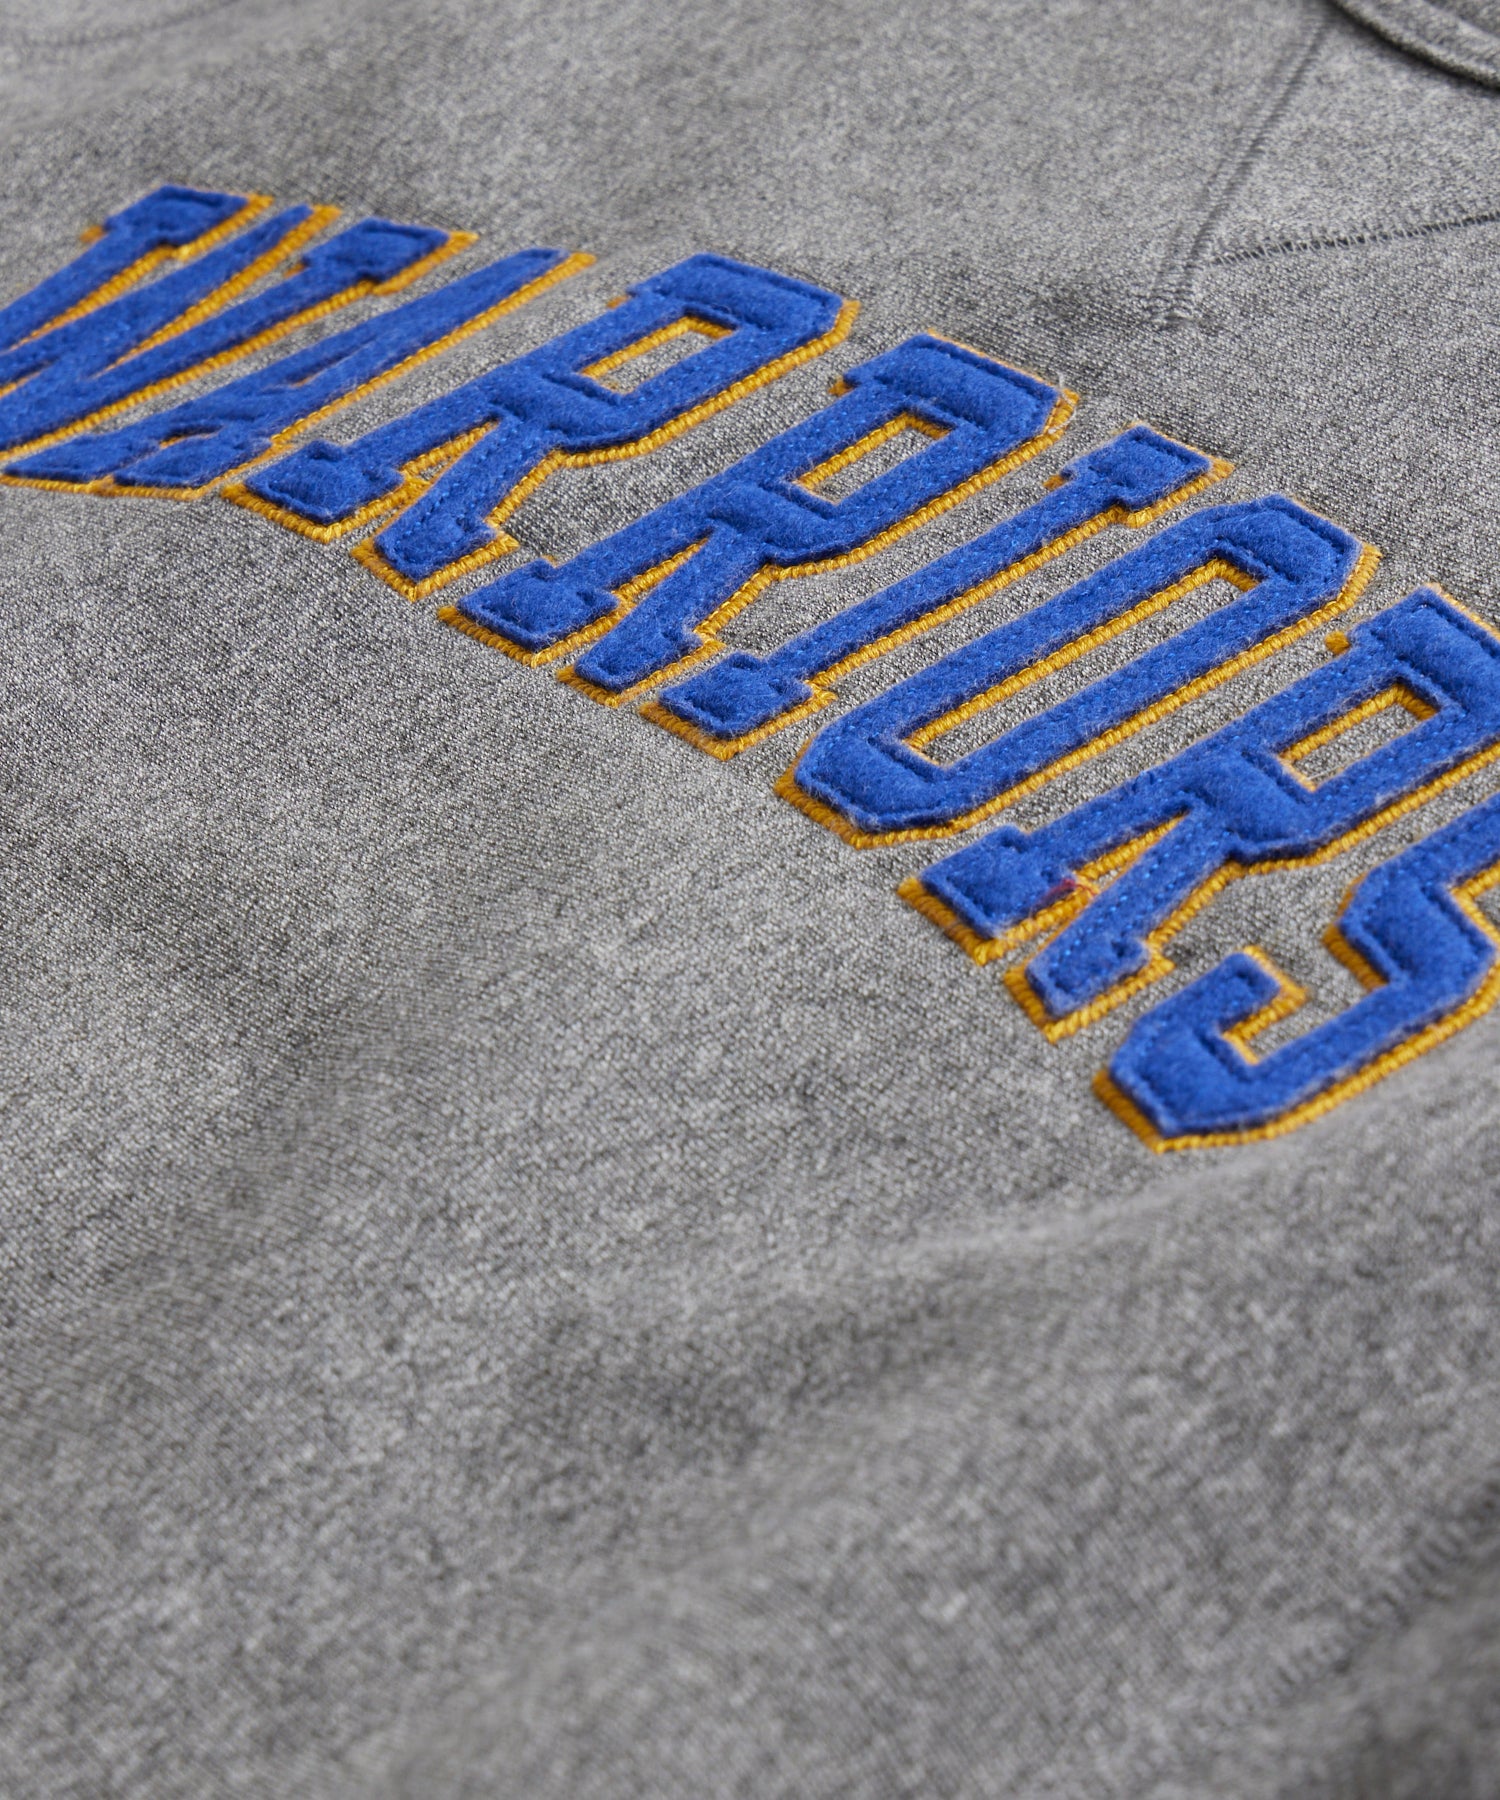 Nike NBA Golden State Warriors Hoodie Sweatshirt Blue Yellow Size